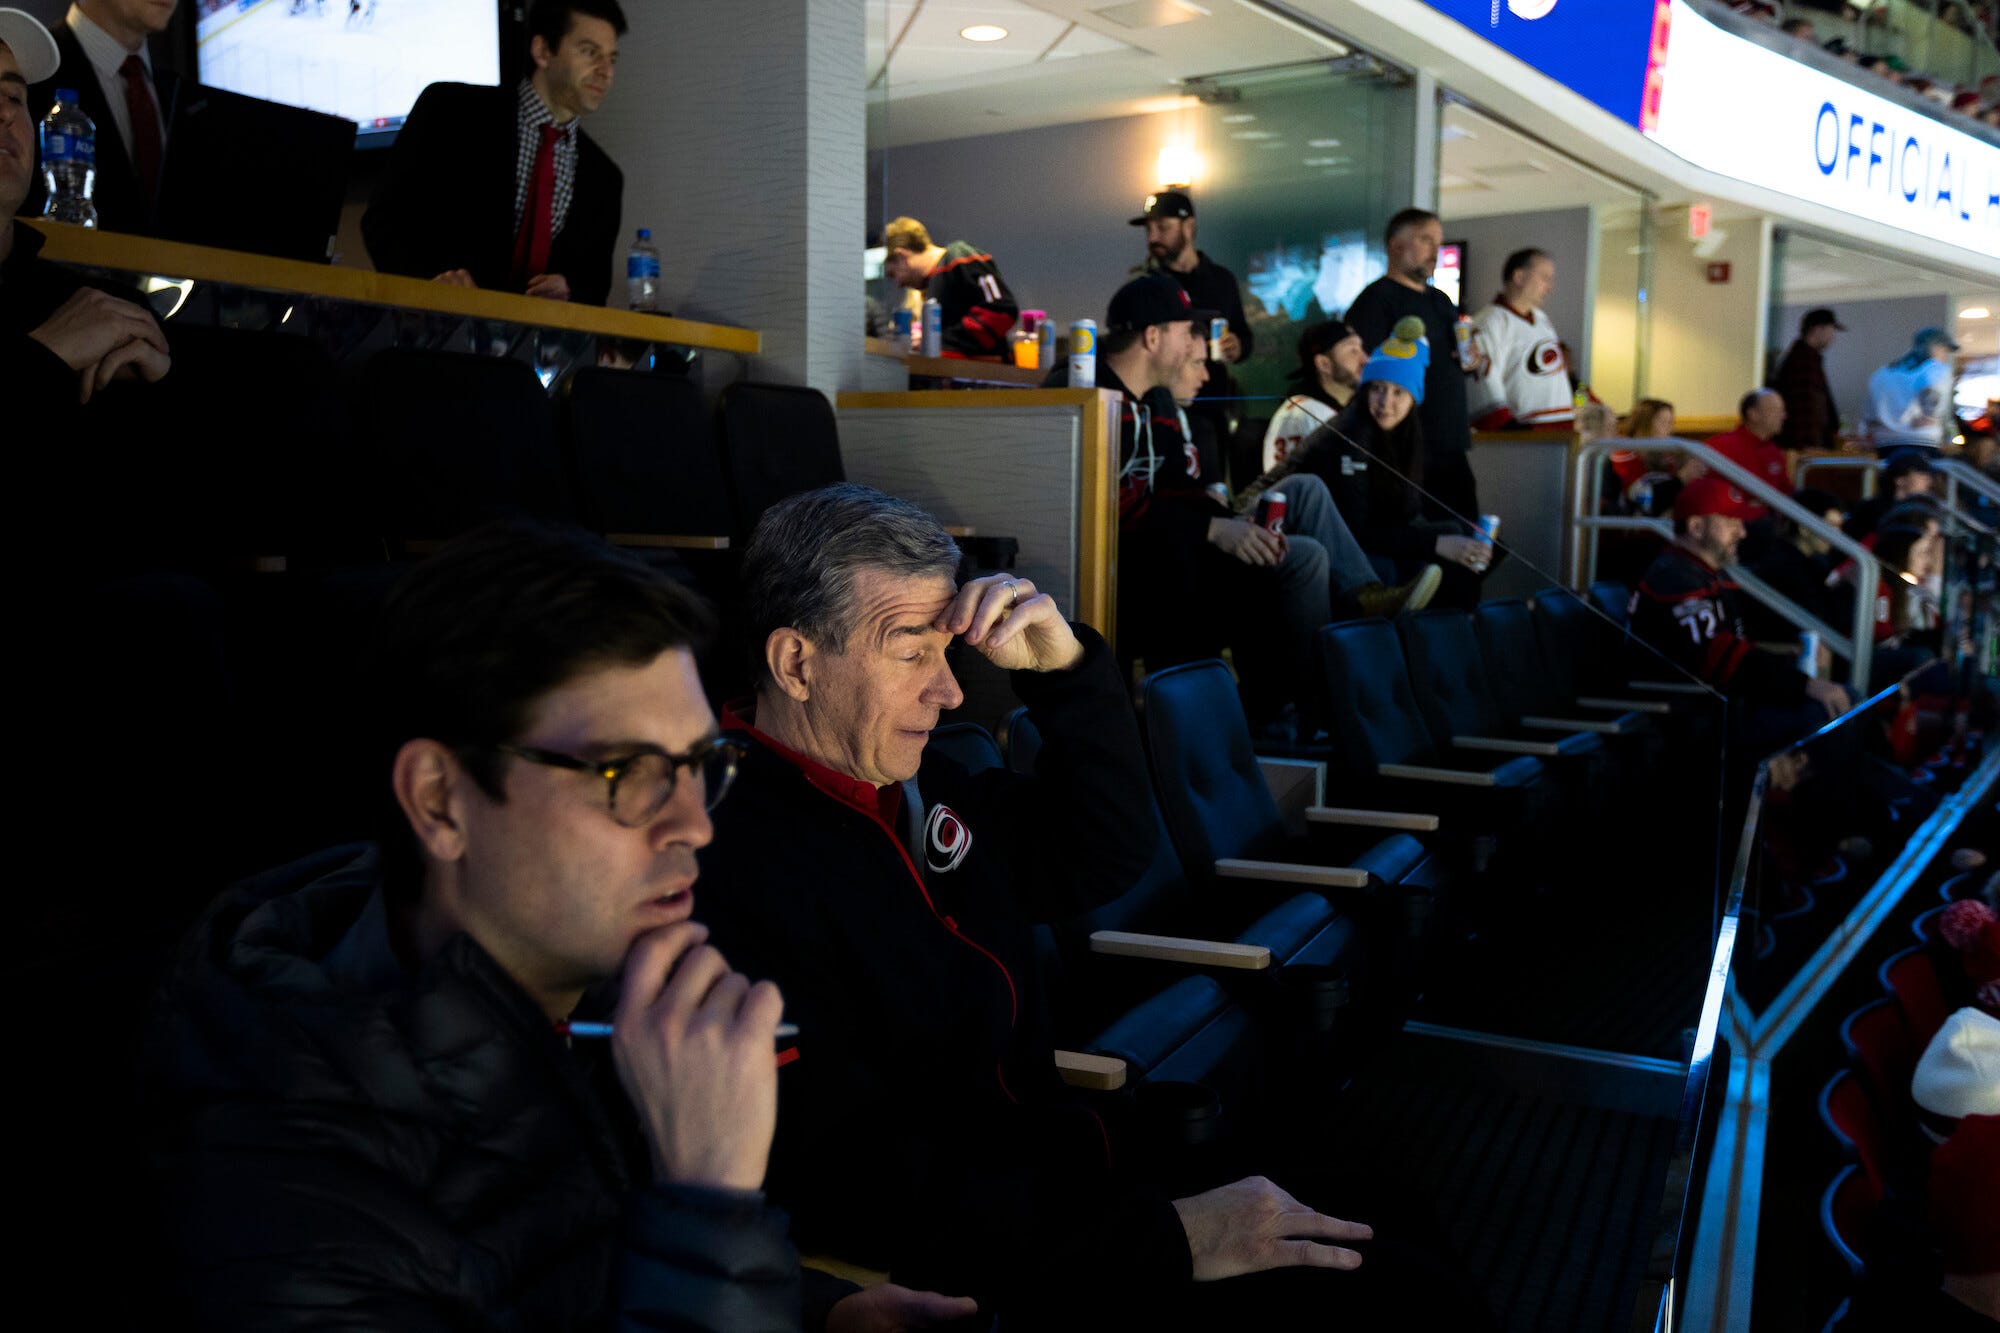 roy cooper looking stressed watching hockey